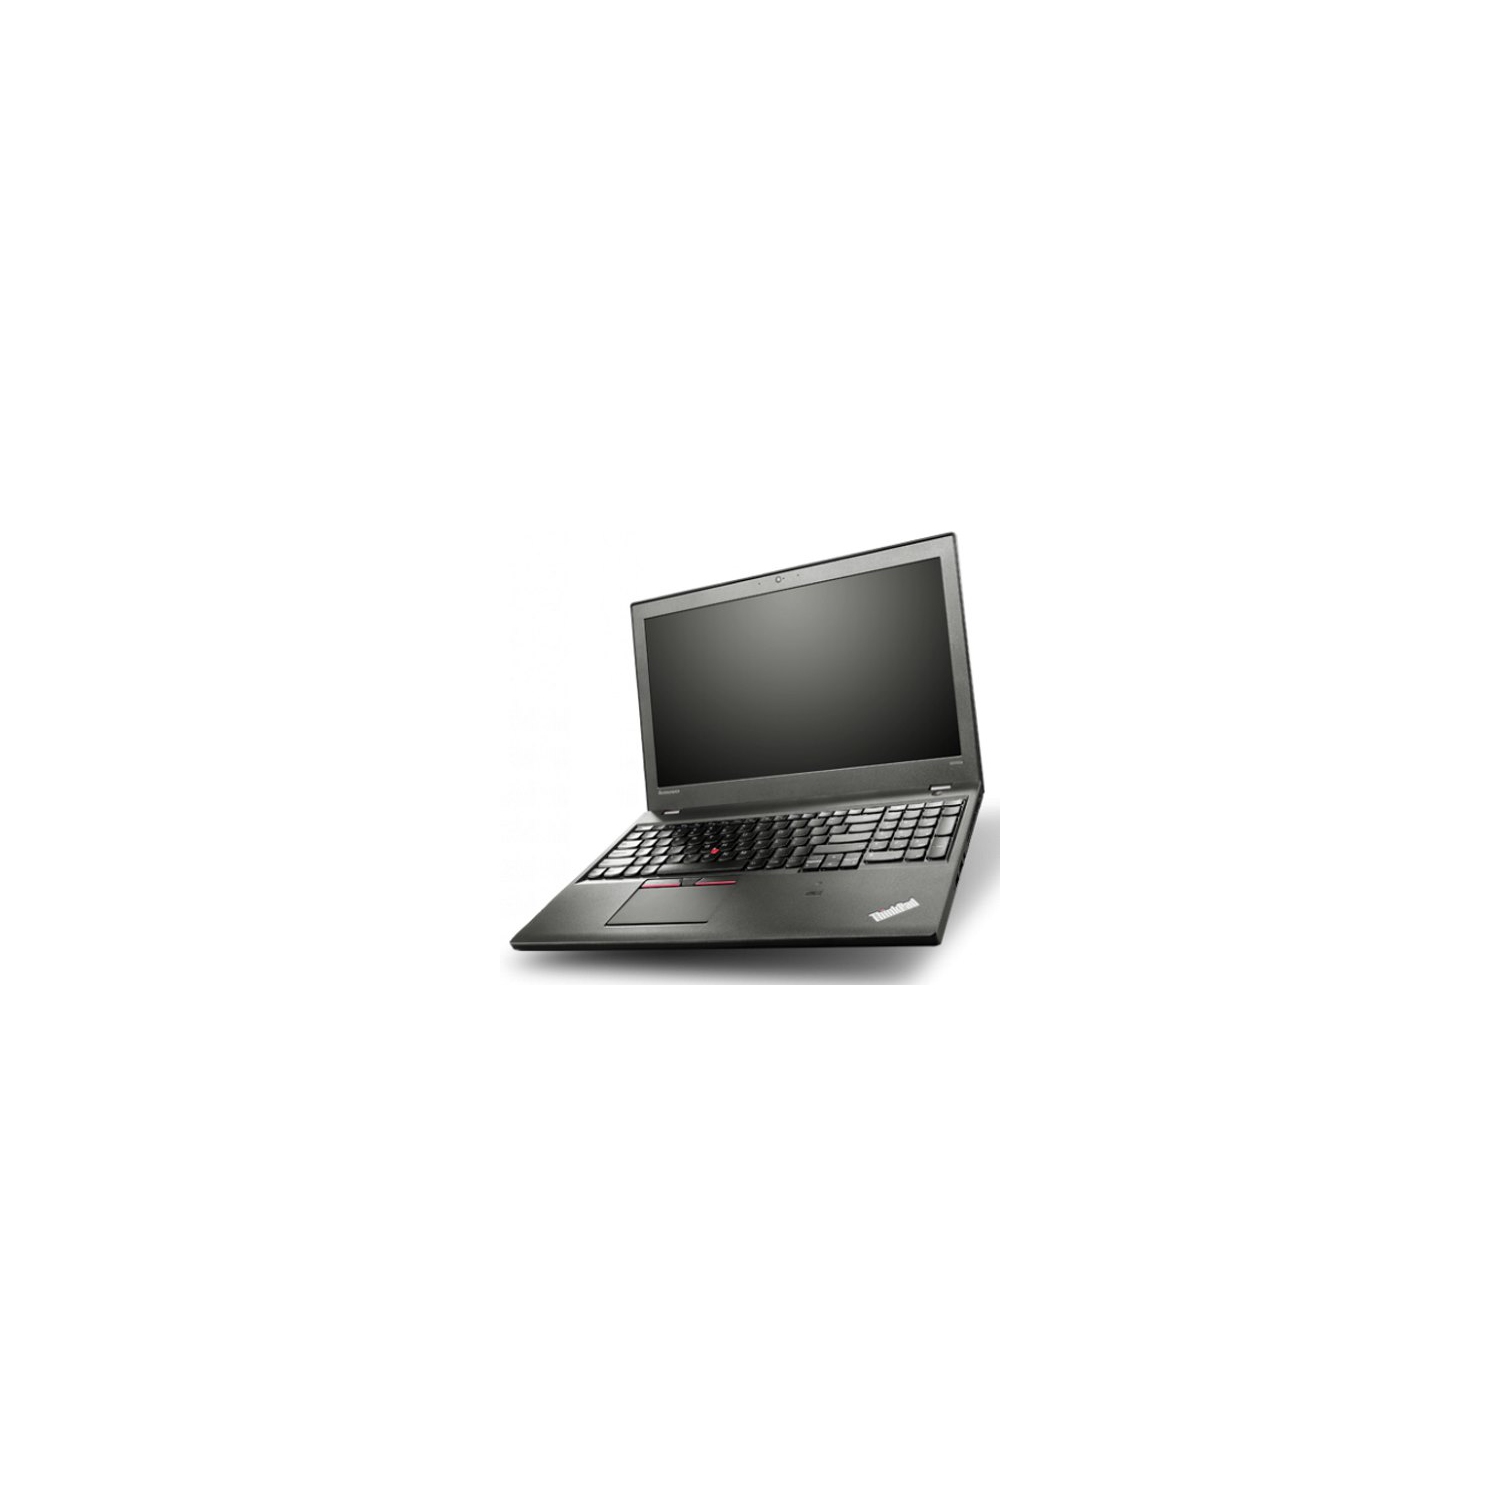 Refurbished (Good) - Lenovo Thinkpad - W550S - Ci7-5600U - 240GB SSD - 16 GB - Windows 10 Professionel